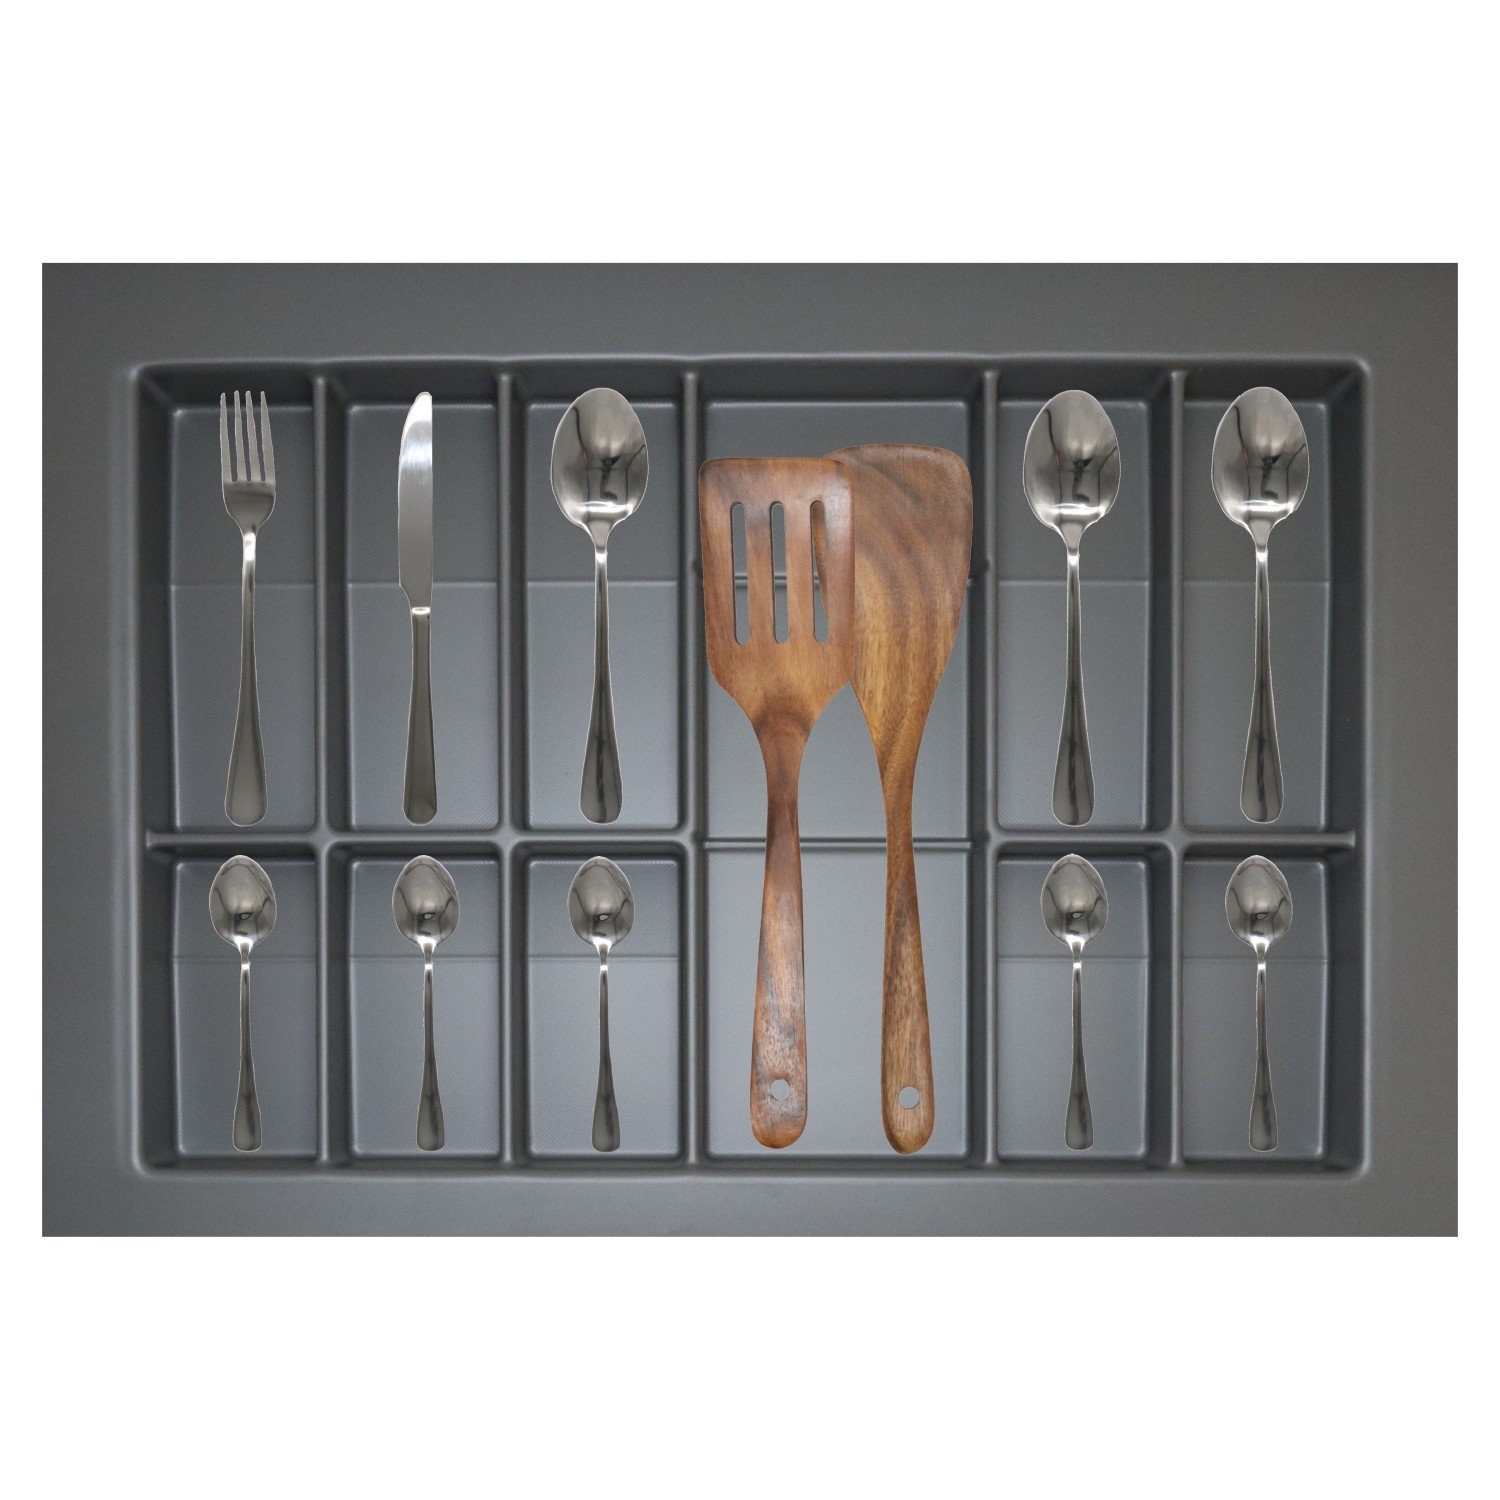 Nick cutlery drawer divider textured anthracite